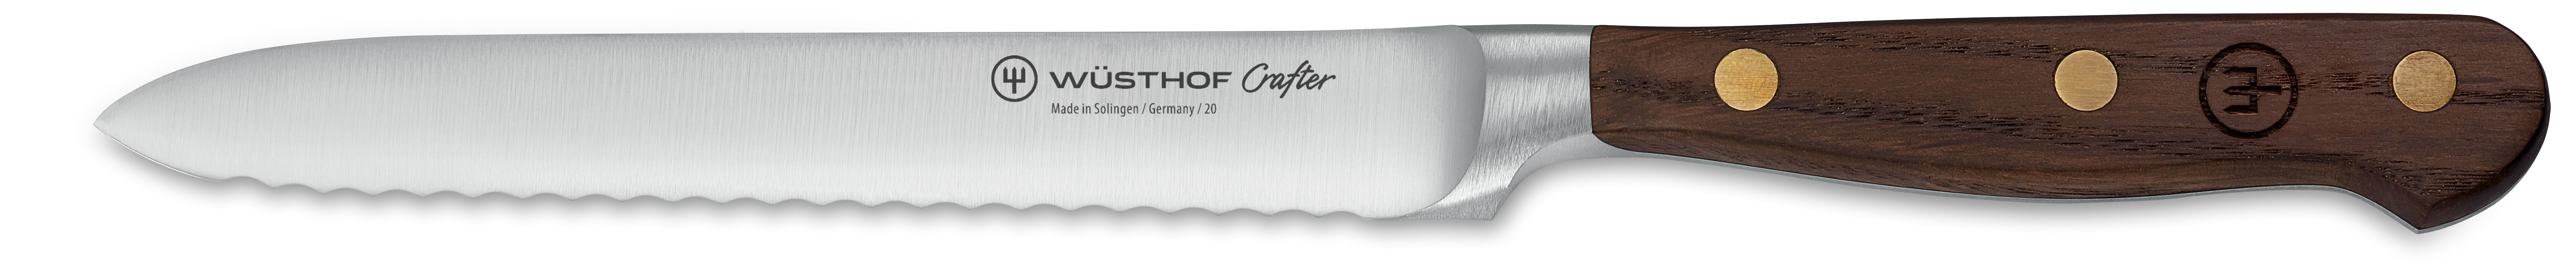 Aufschnittmesser / Serrated utility knife 